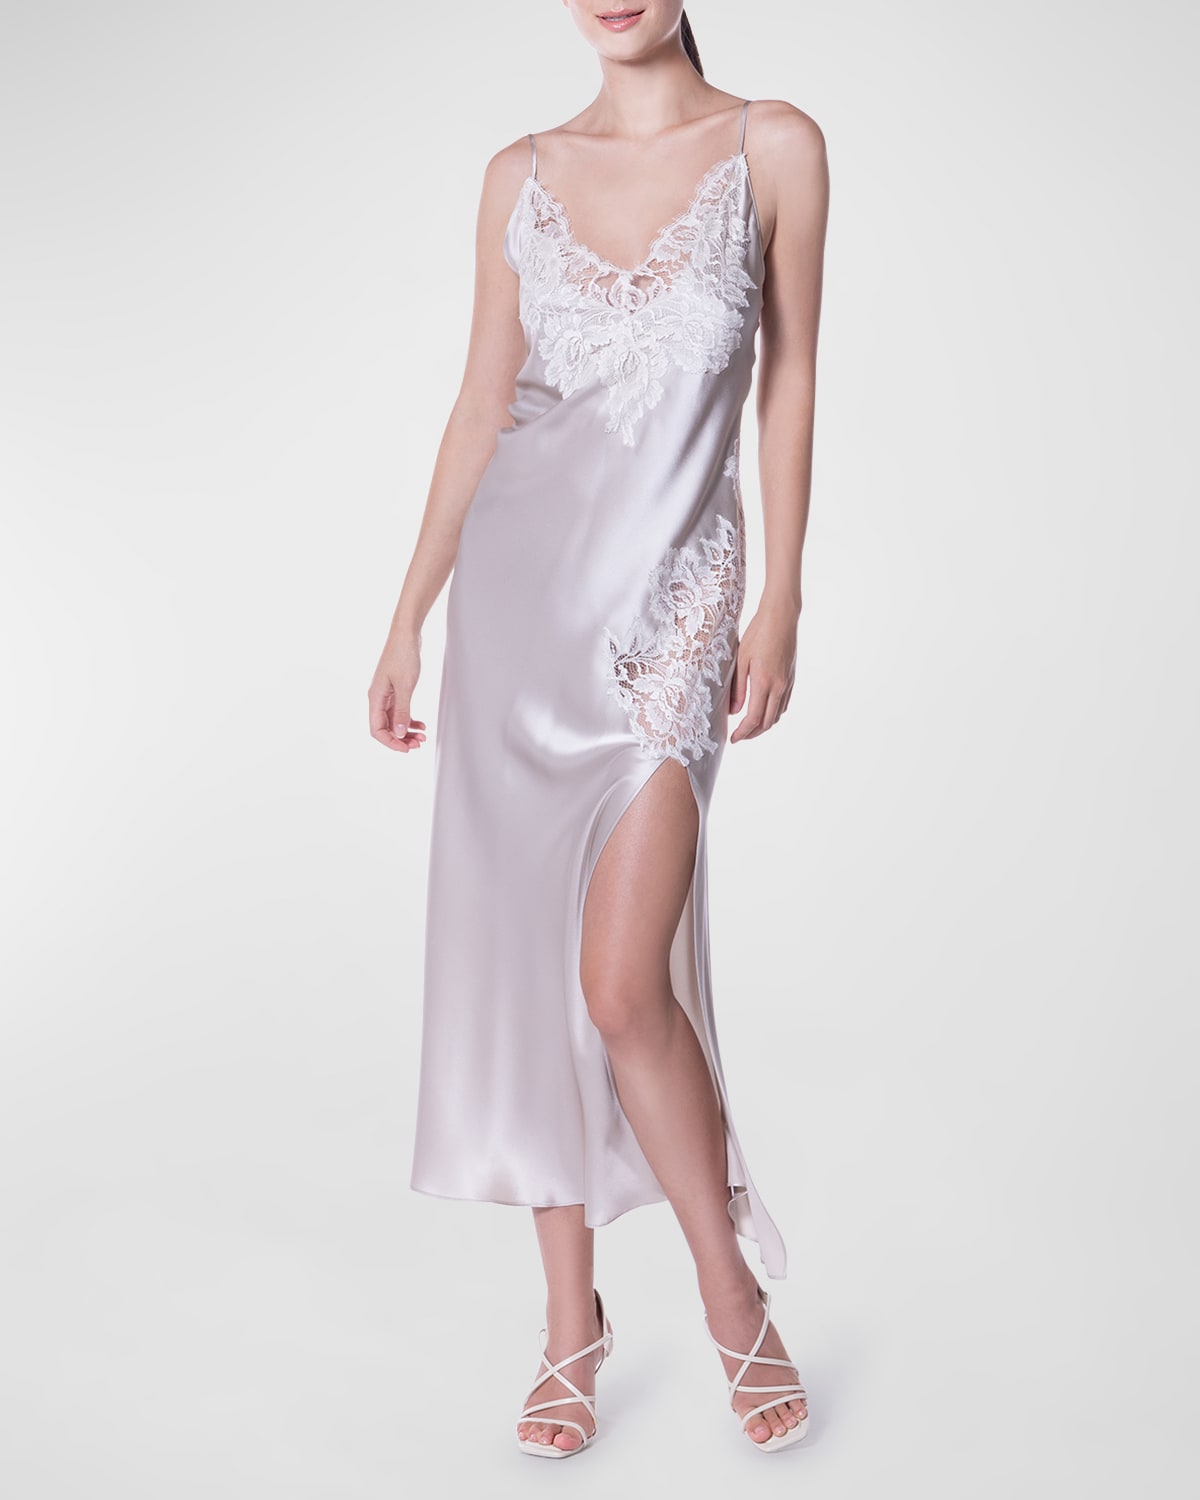 Christine Lingerie Venus Lace-Trim Charmeuse Nightgown